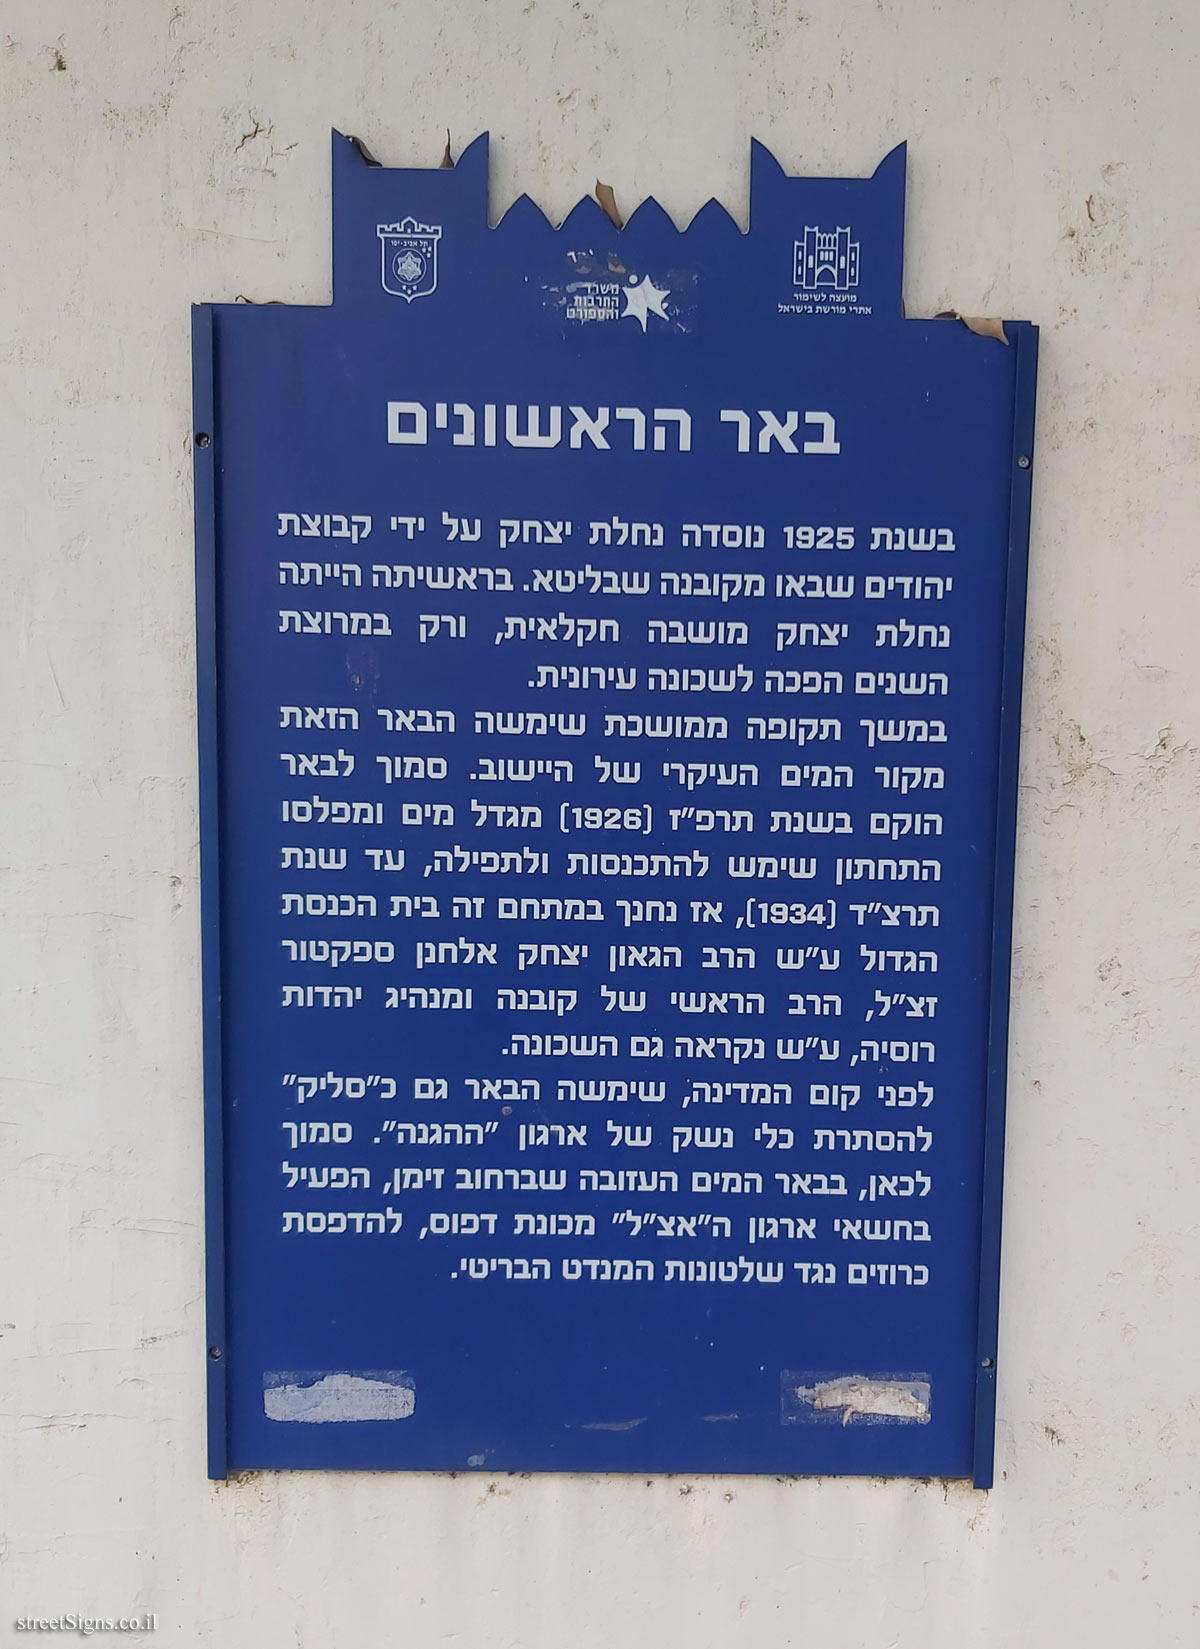 Tel Aviv - Heritage Sites in Israel - The Founders well